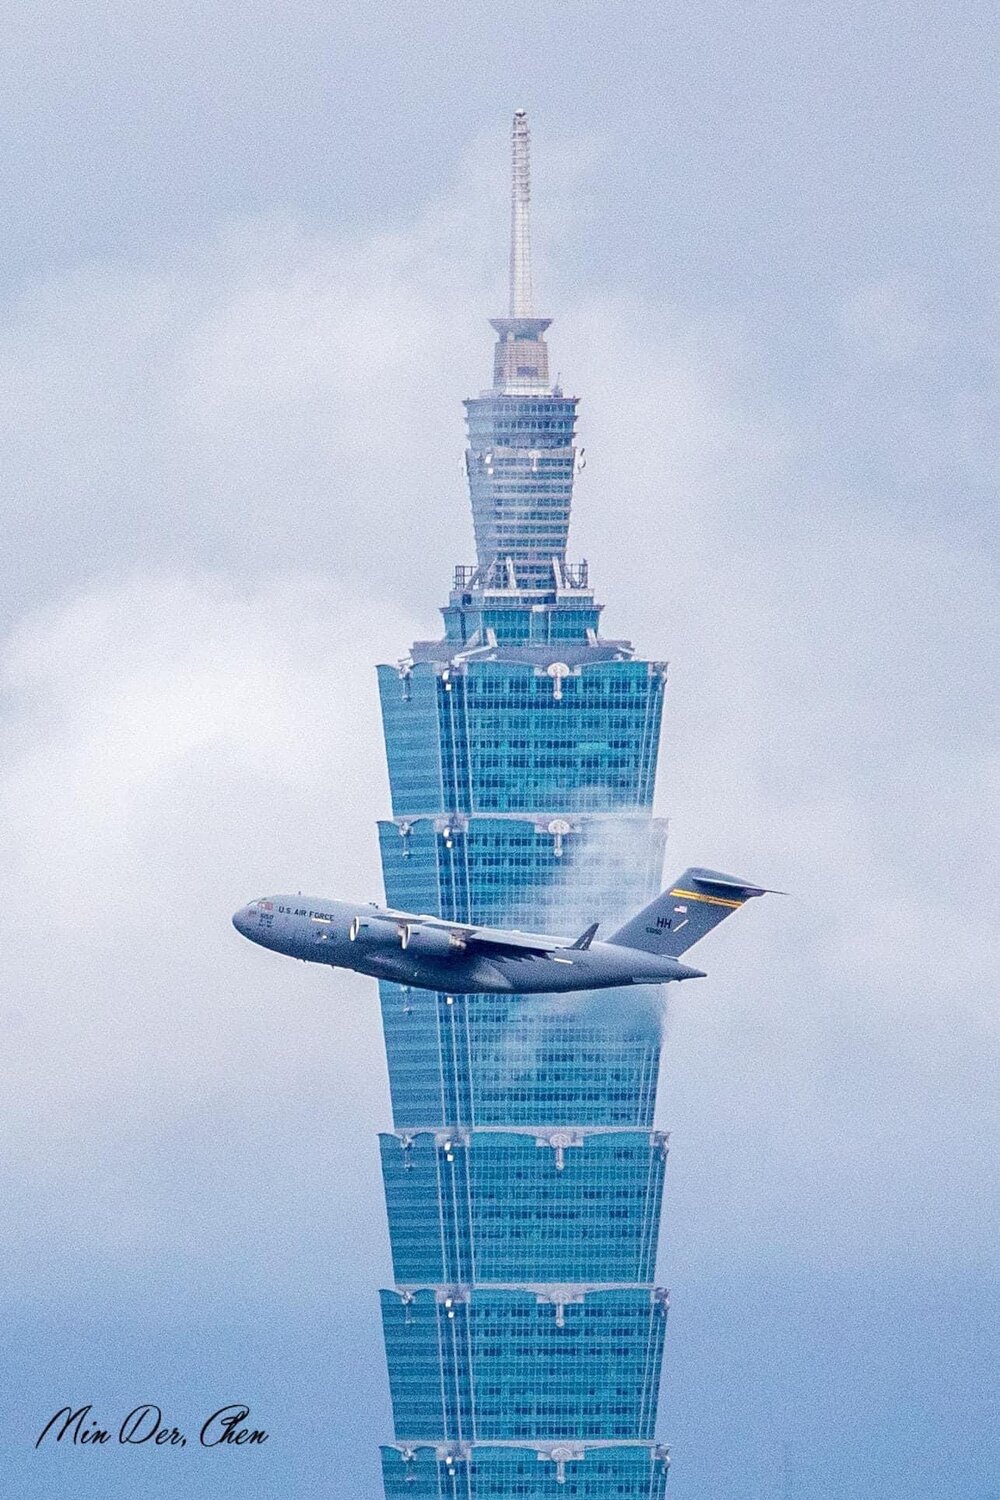 US Air Force C-17  Taiwan’s landmark building 101 Tower. (Credit: Min Der, Chen)